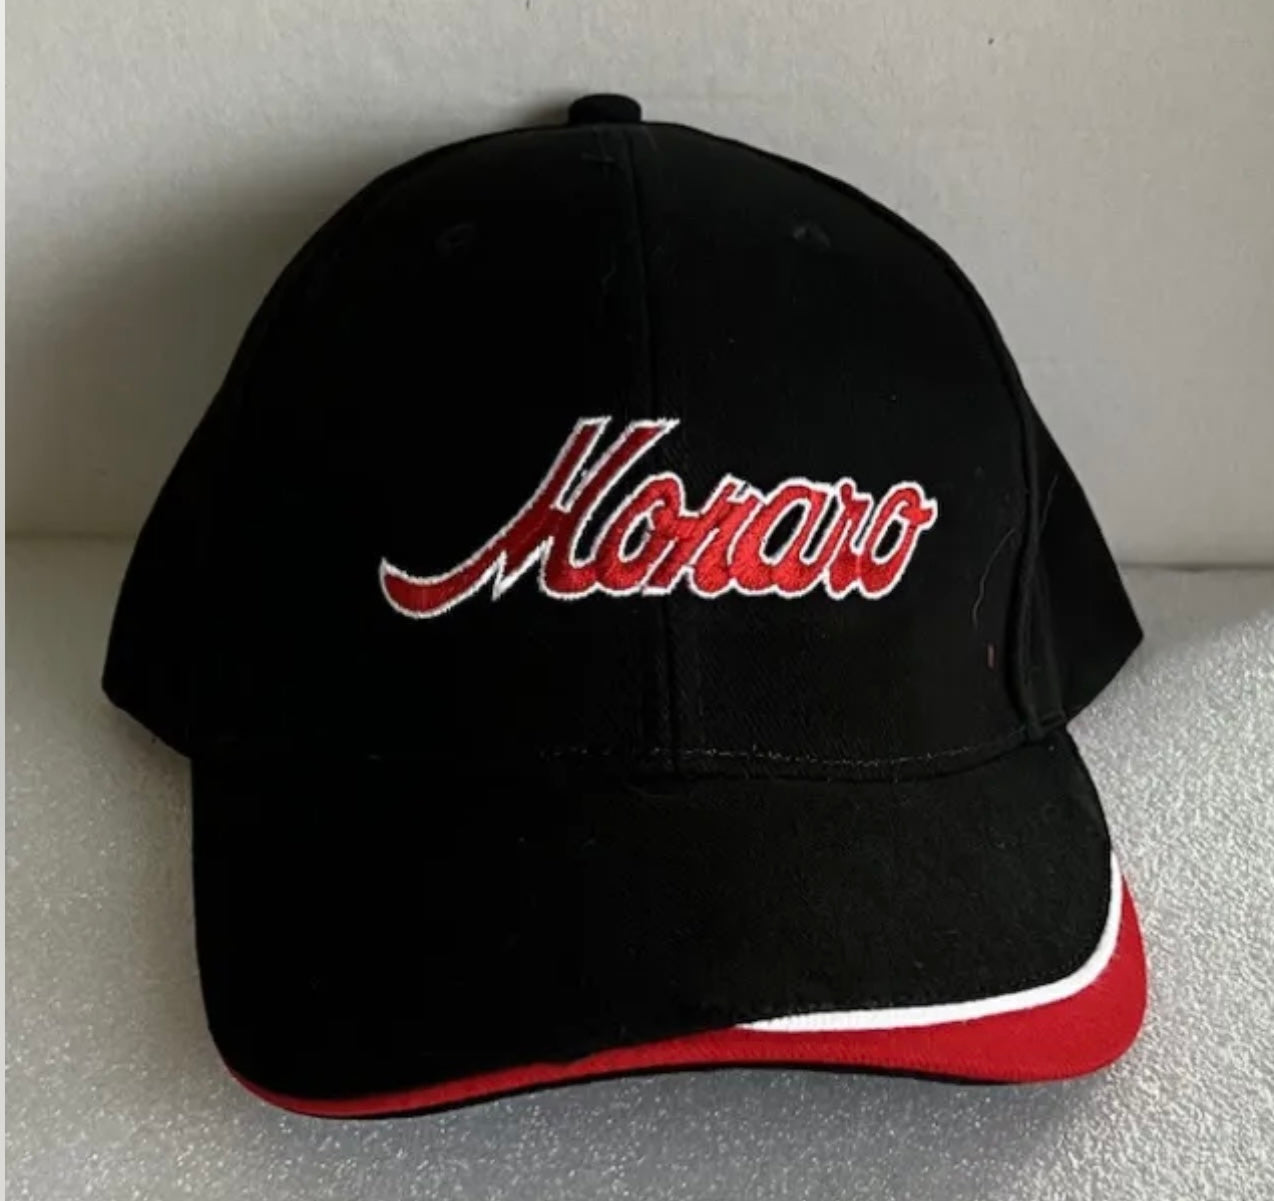 Monaro Embroidered Hat